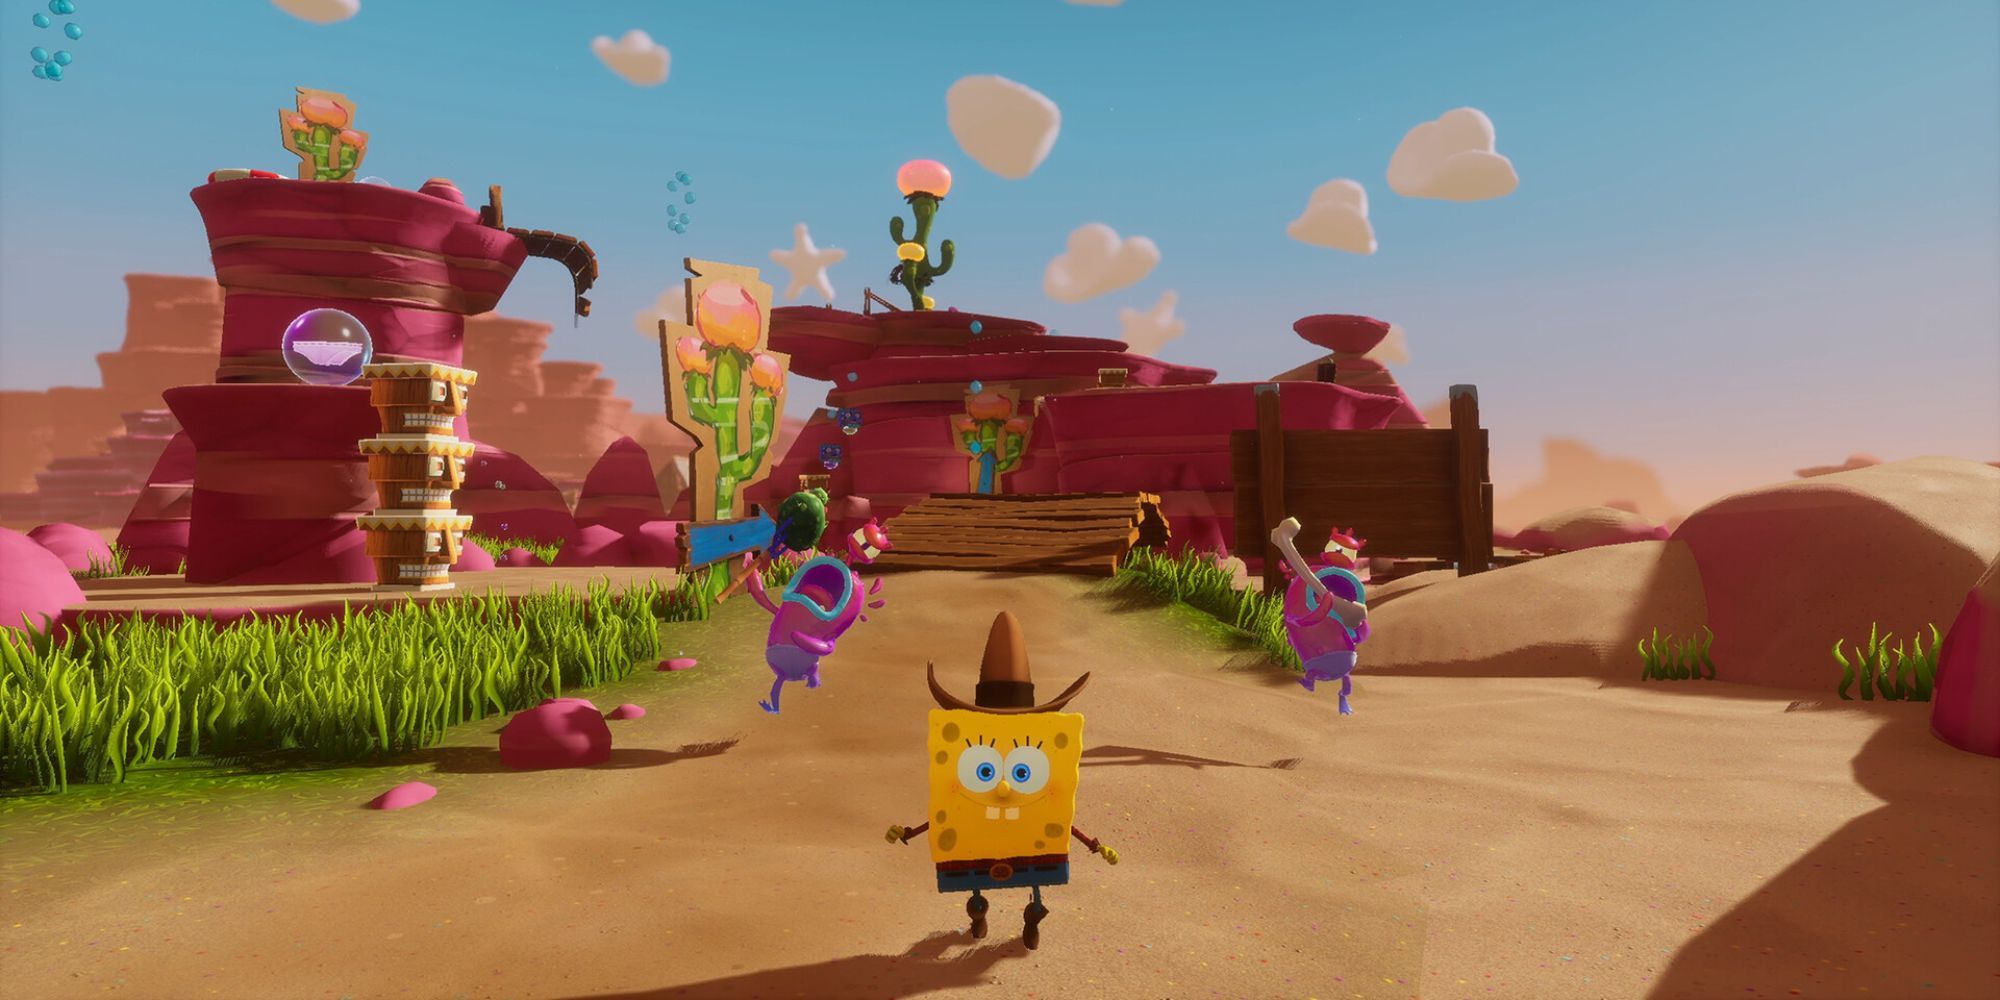 SpongeBob SquarePants Cosmic Shake cowboy running from enemies